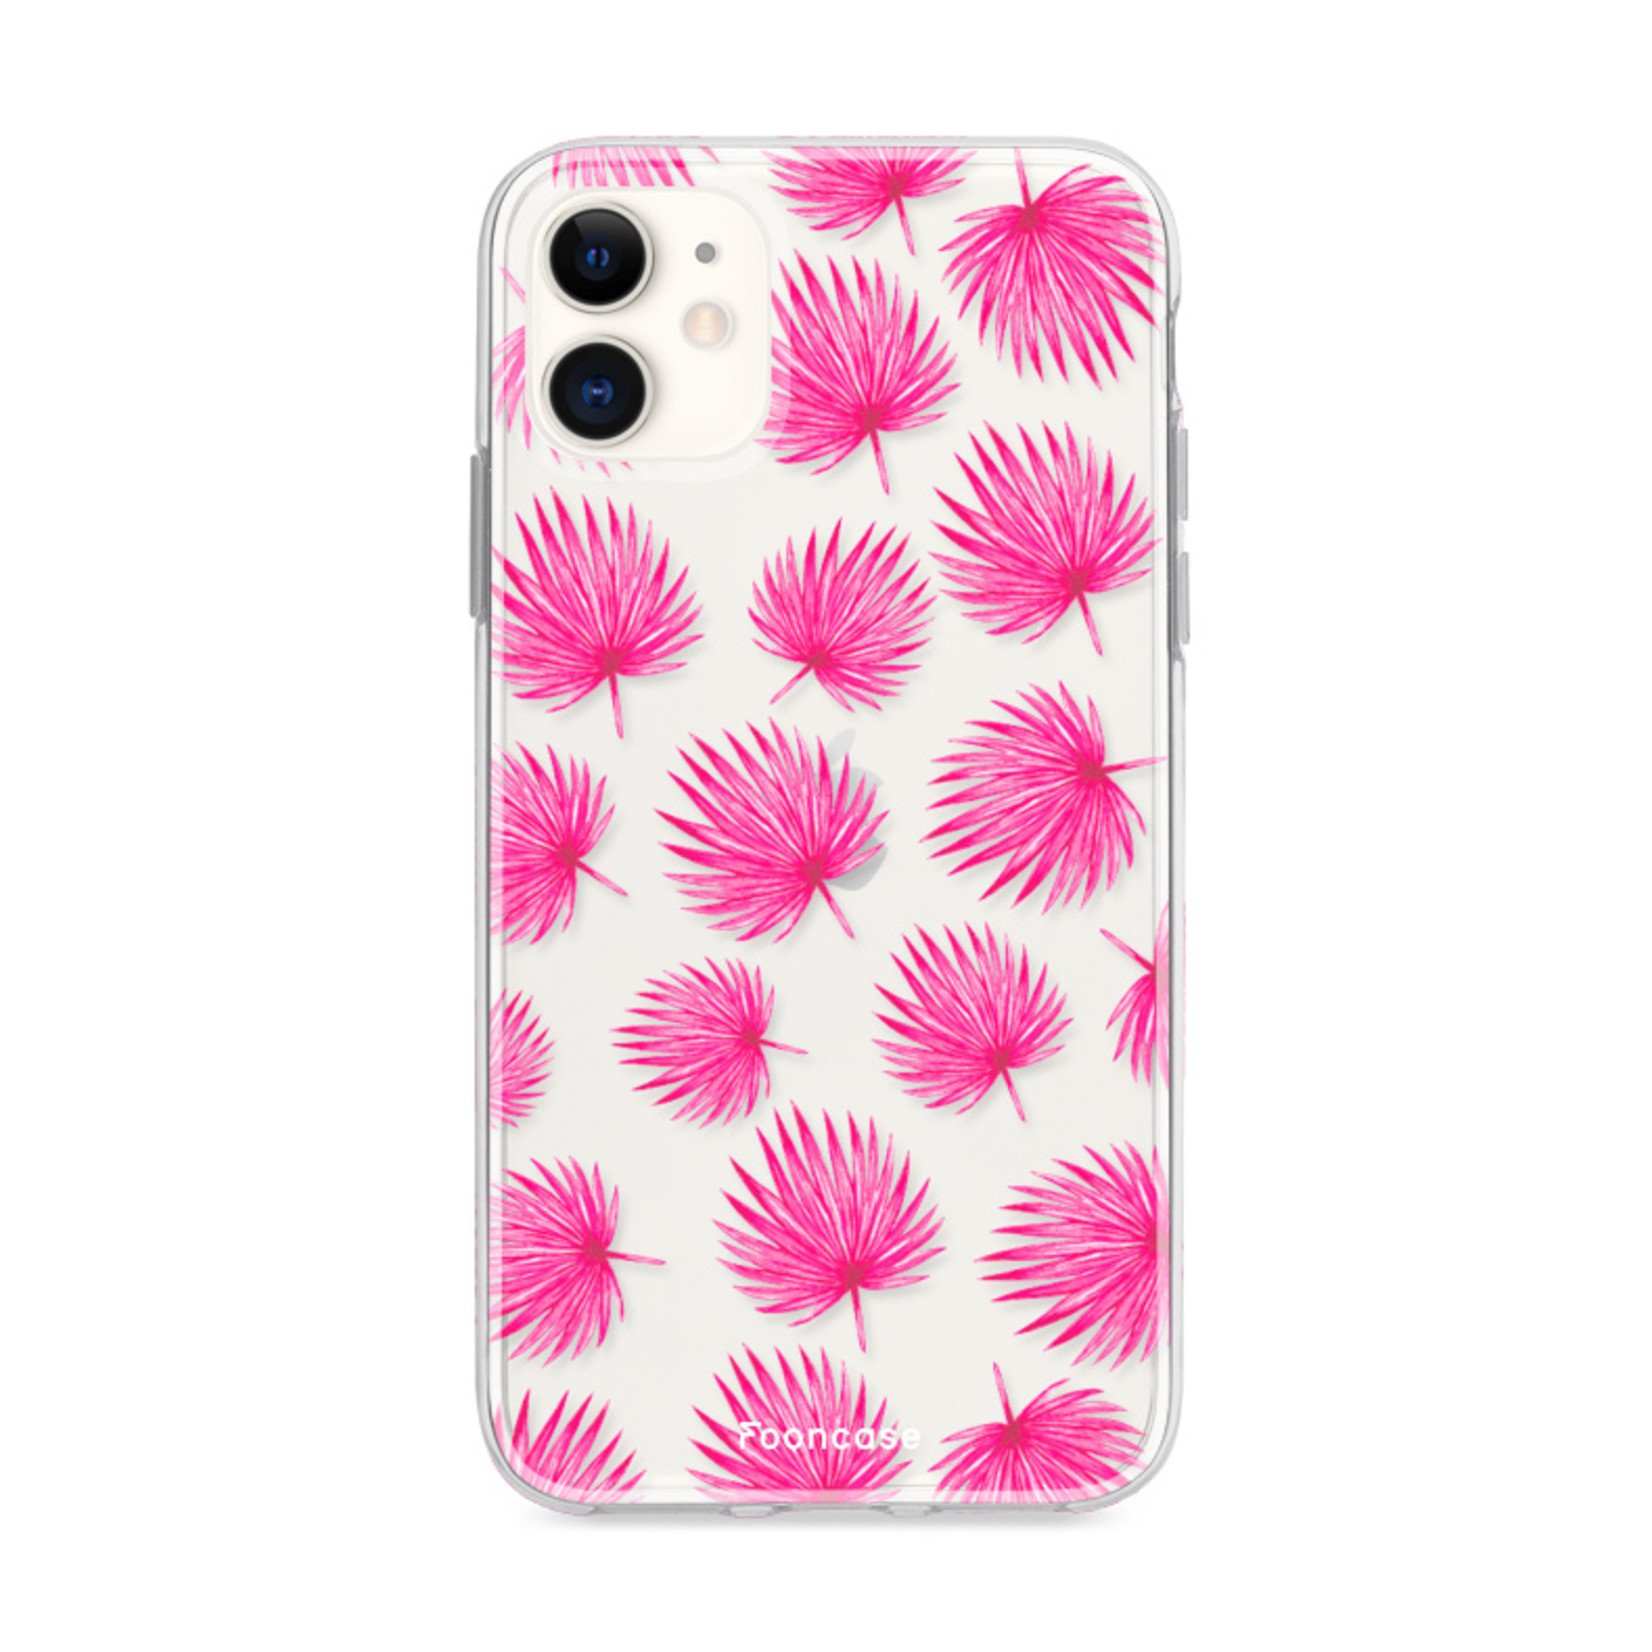 FOONCASE iPhone 11 hoesje TPU Soft Case - Back Cover - Pink leaves / Roze bladeren